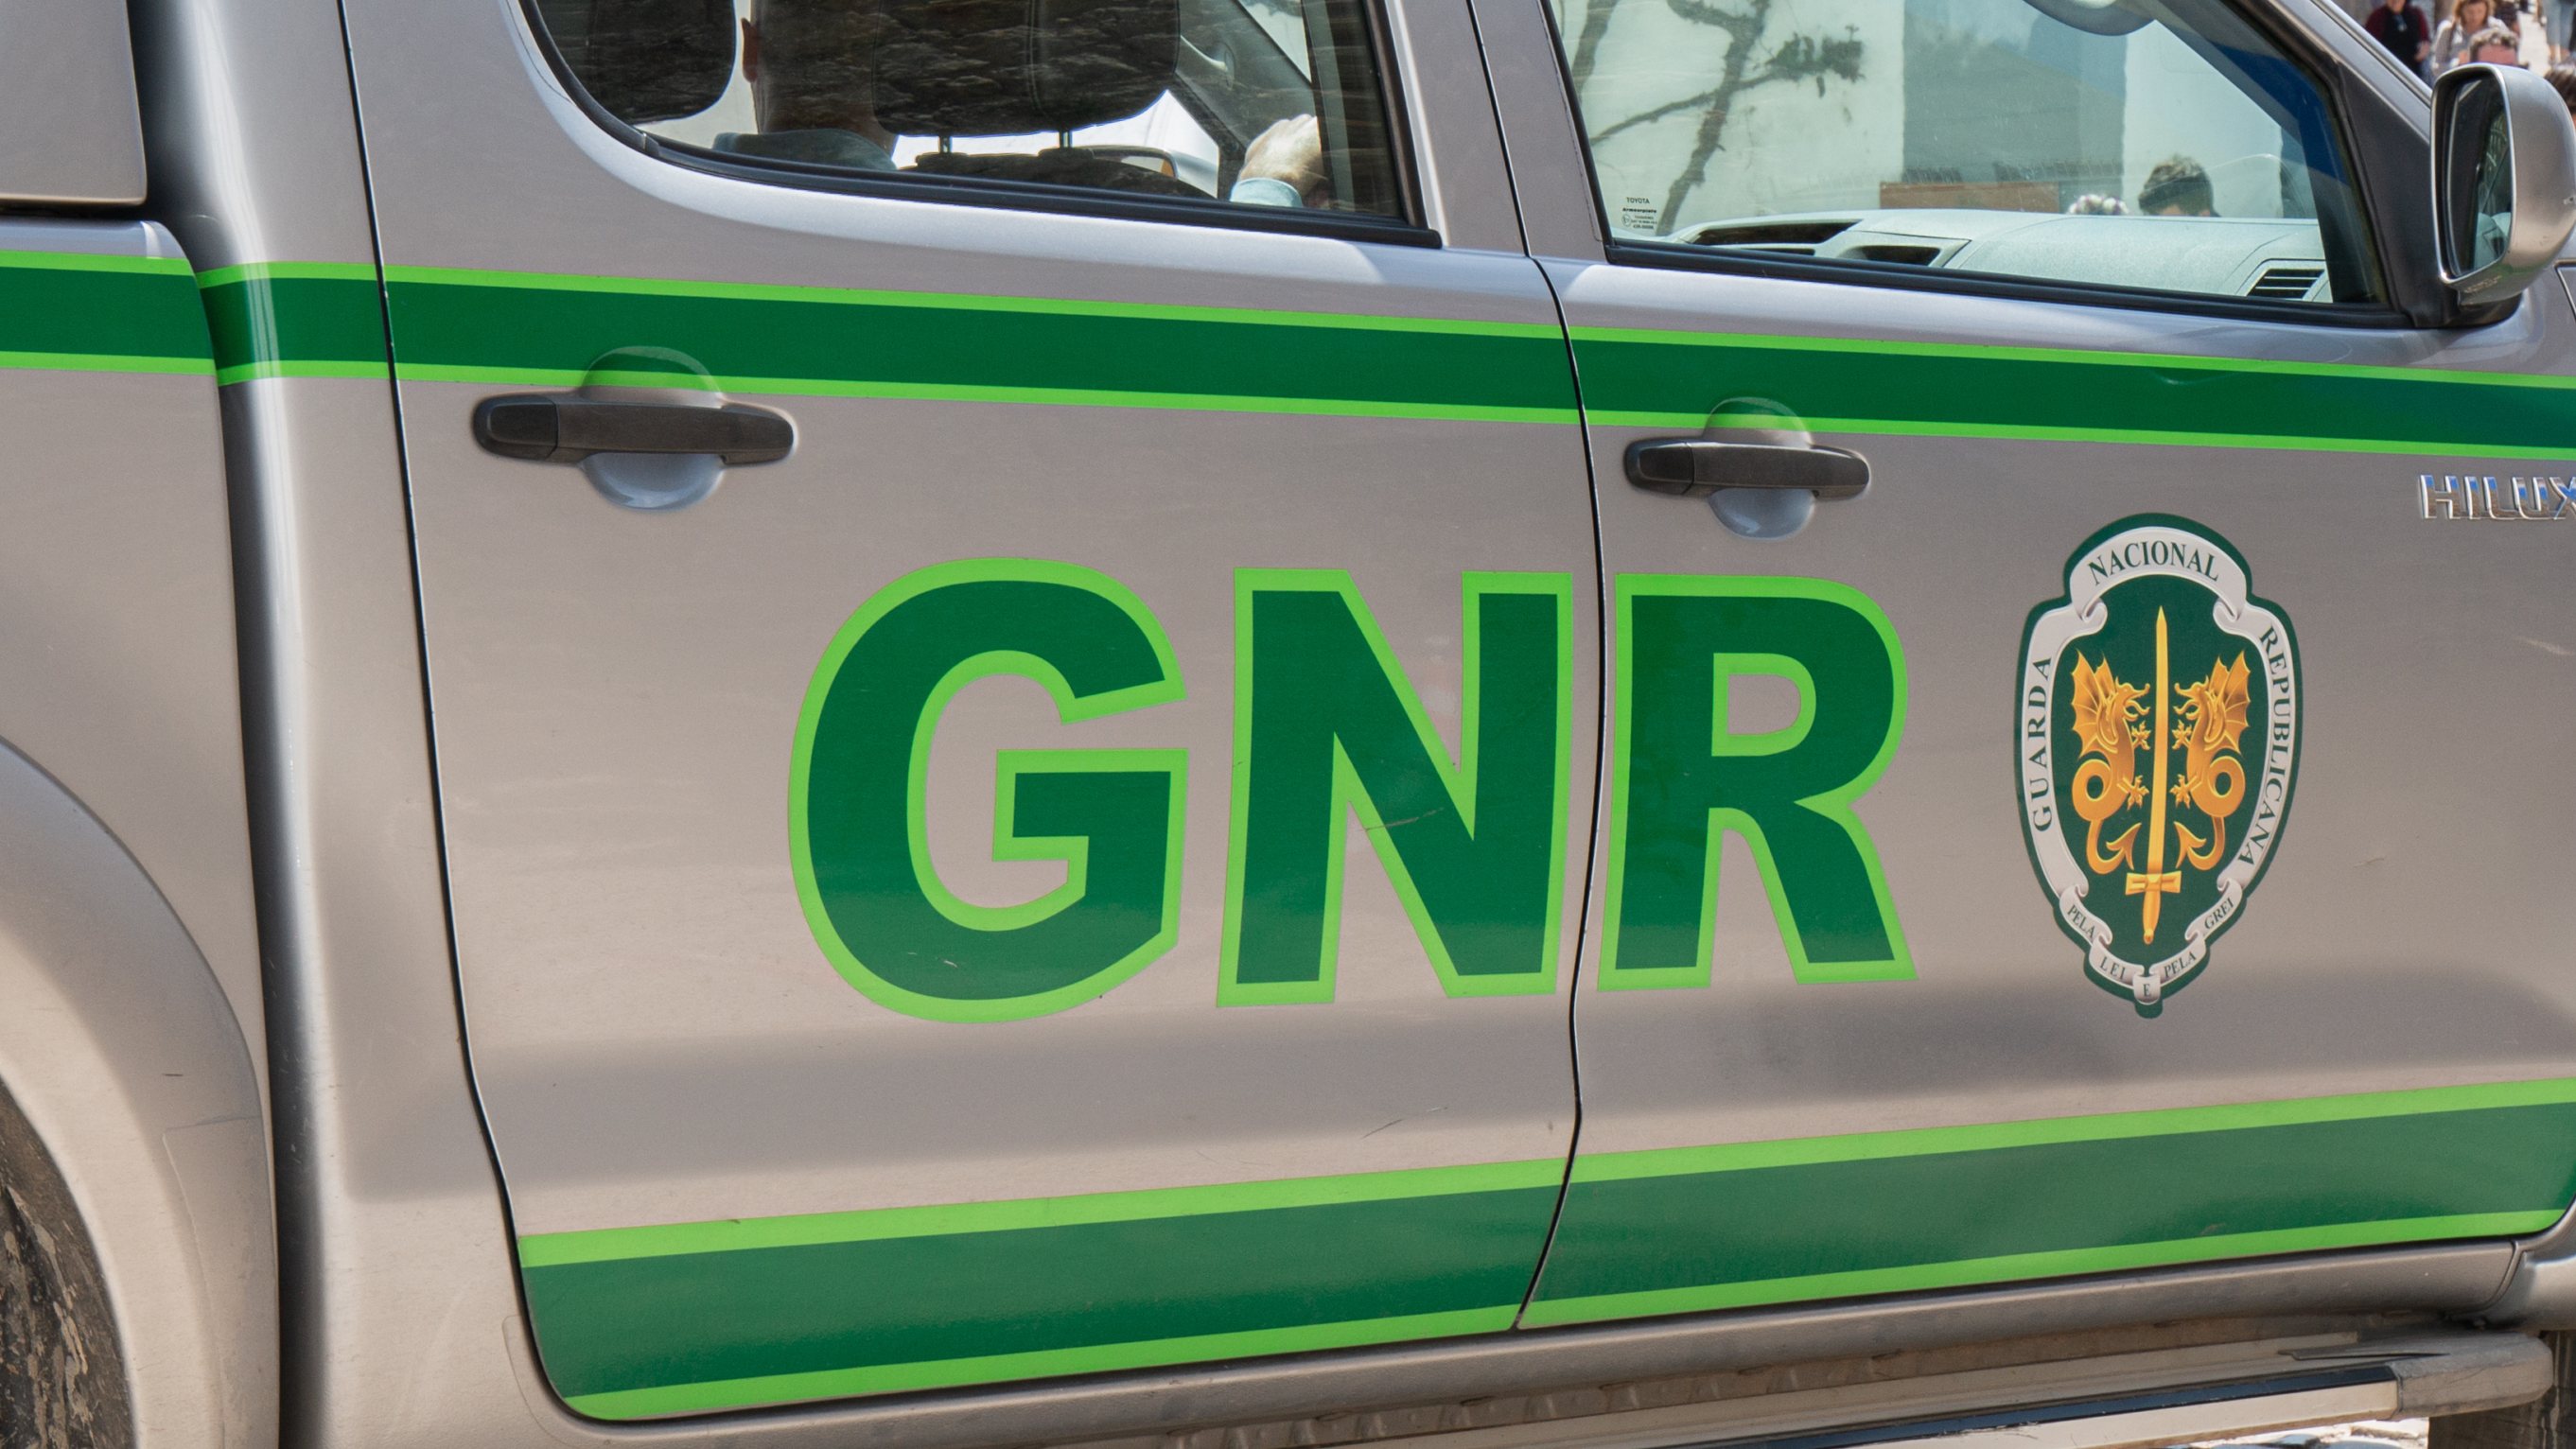 car of the Republican National Guard (GNR) in  Obidos, Portugal